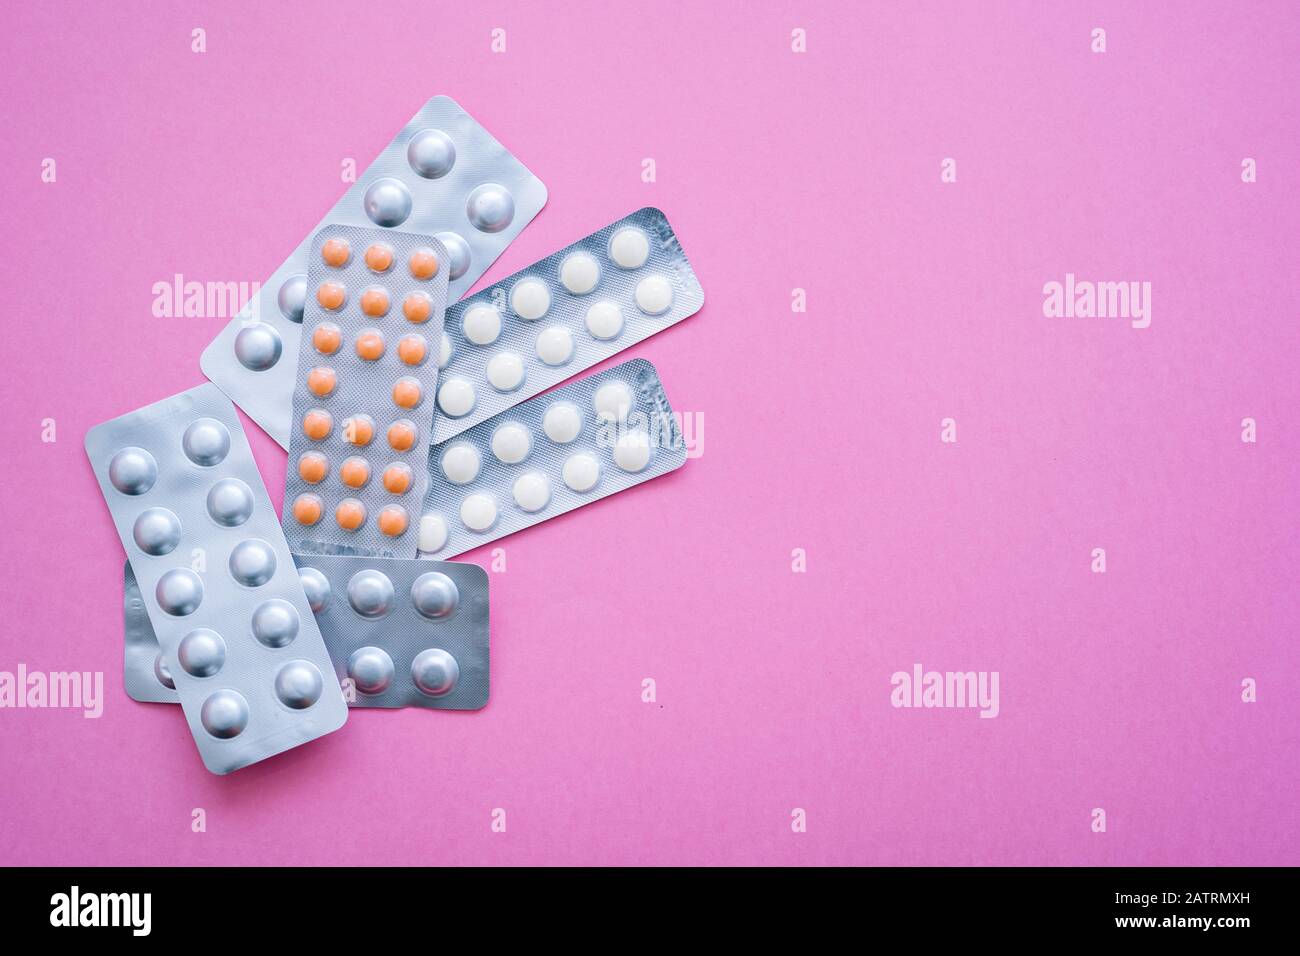 Verschiedene Medikamente - Aluminium-Blister-Tabletten mit Vitaminen, Tabletten, Kapseln auf pinkfarbenem Hintergrund. Pharmazeutisches Antibiotikum, Medikament. Pharma Stockfoto